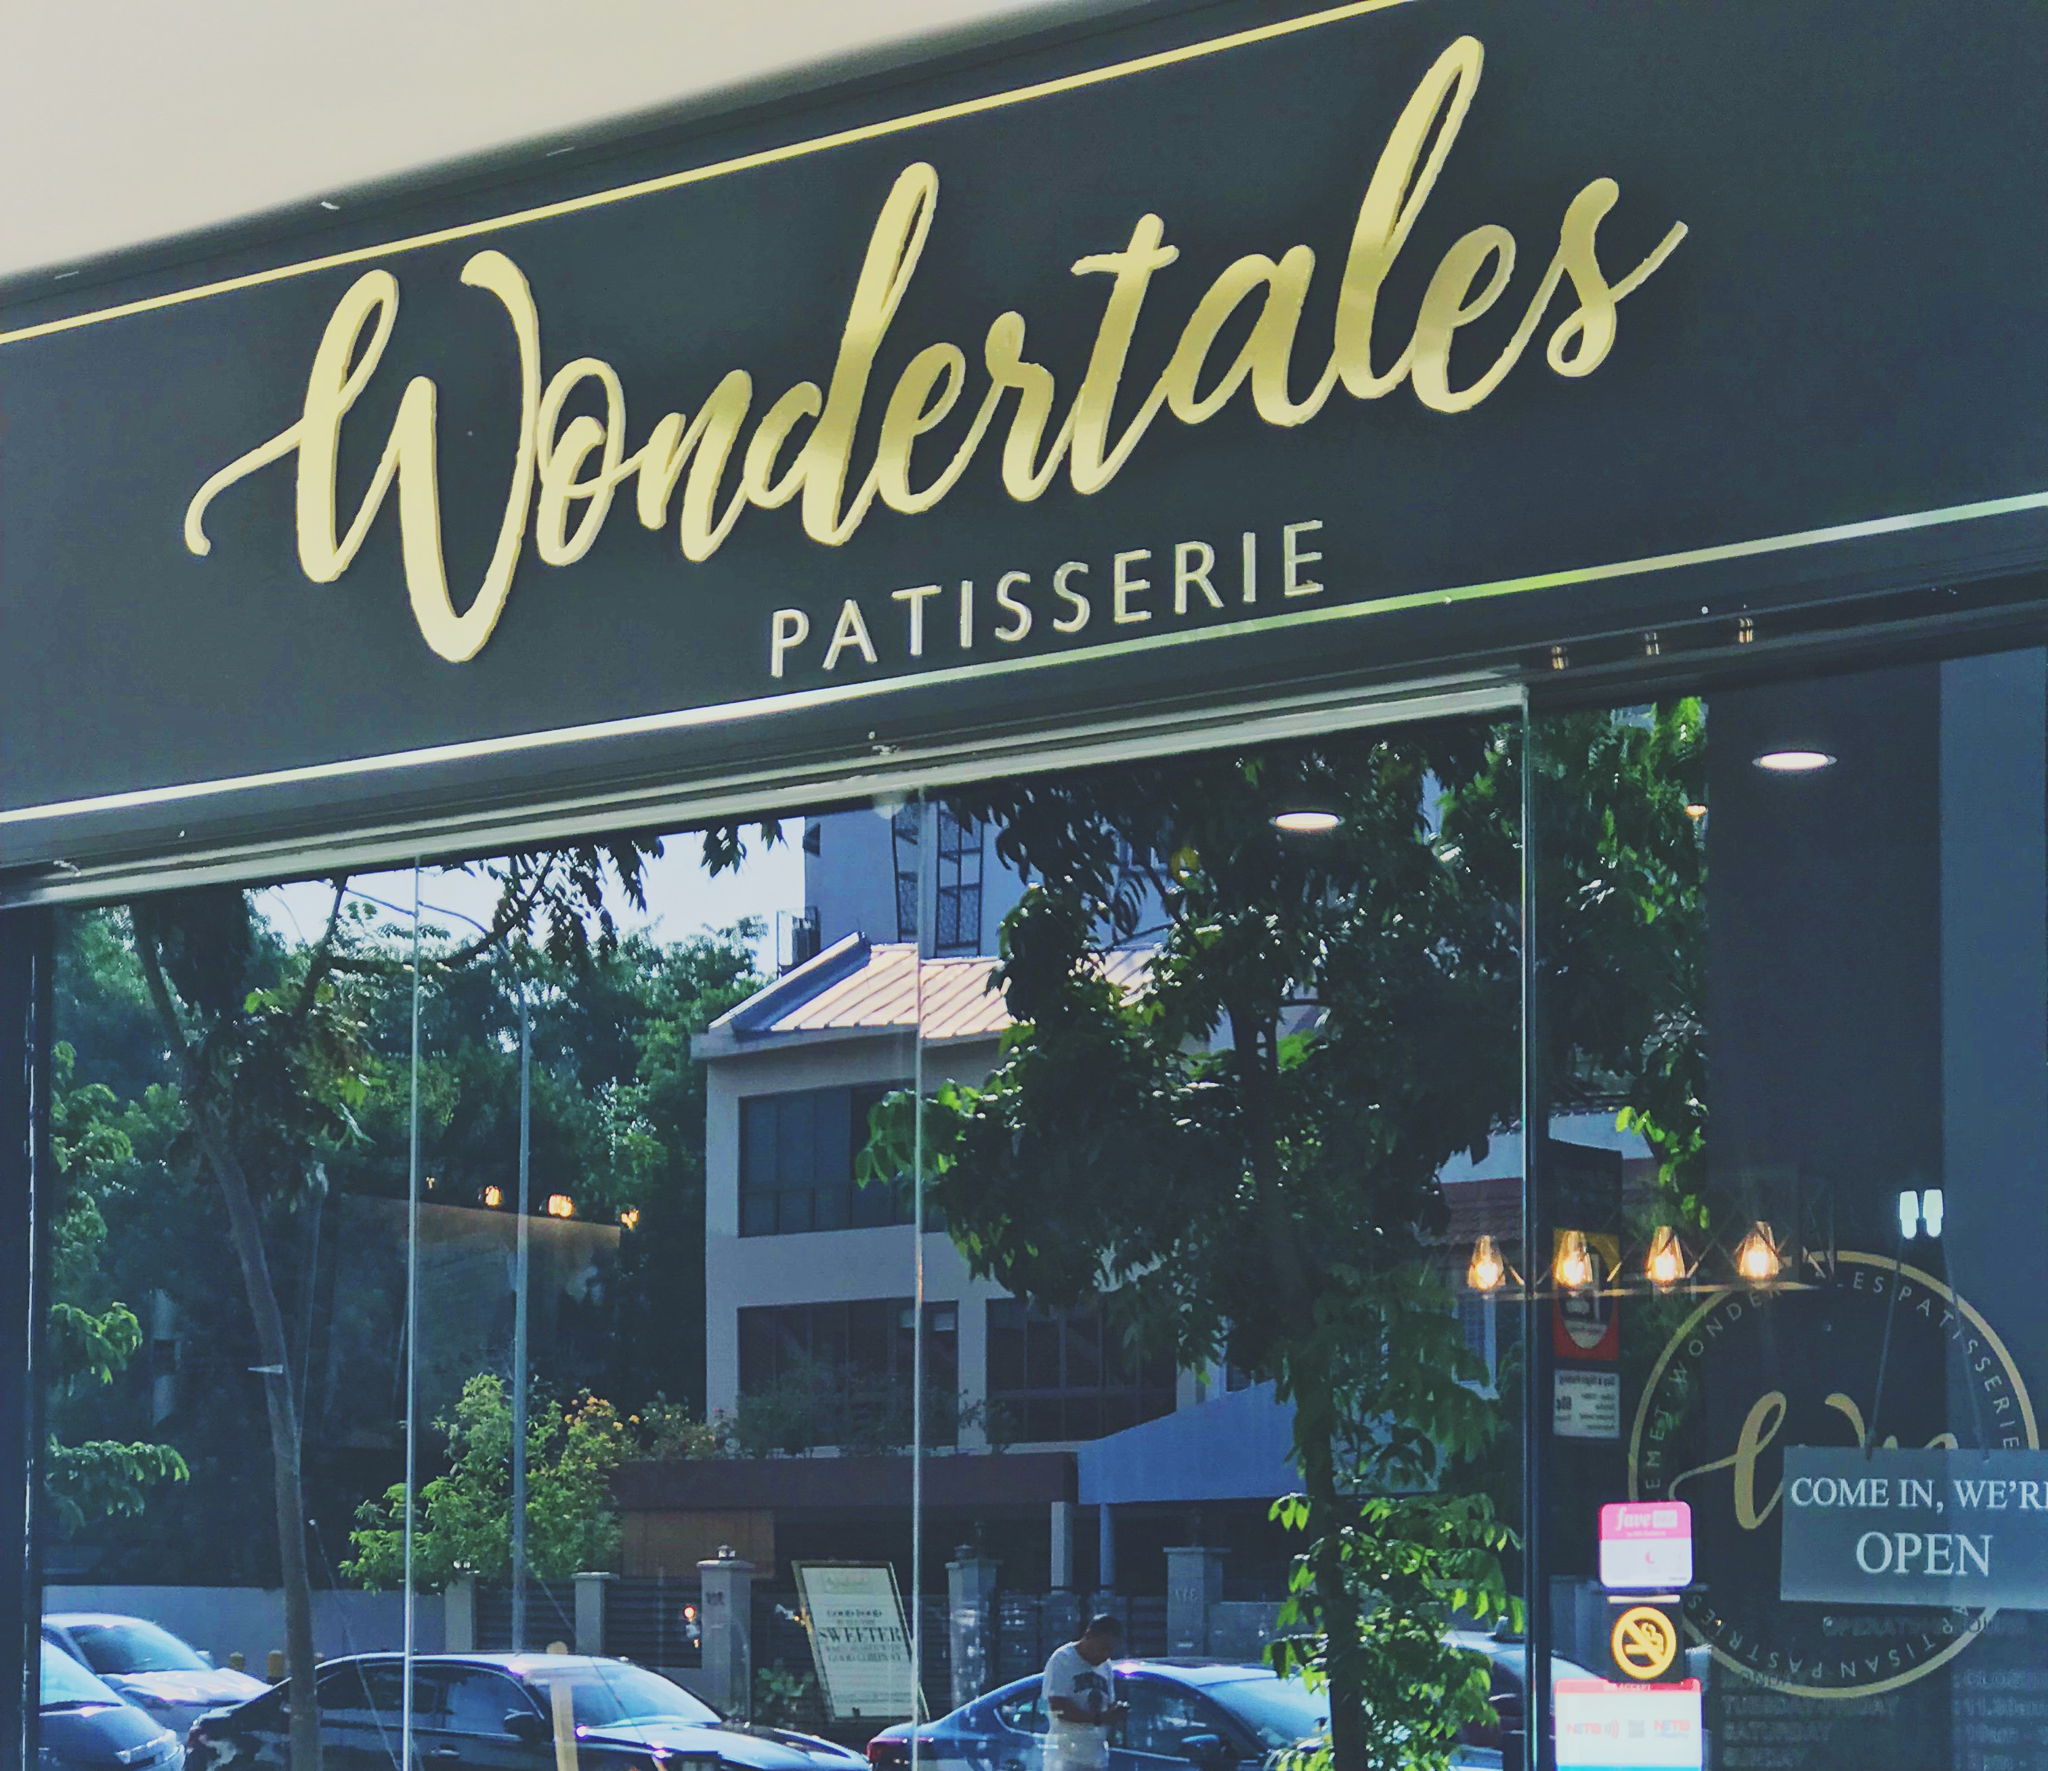 ✨ About Wondertales Patisserie ✨